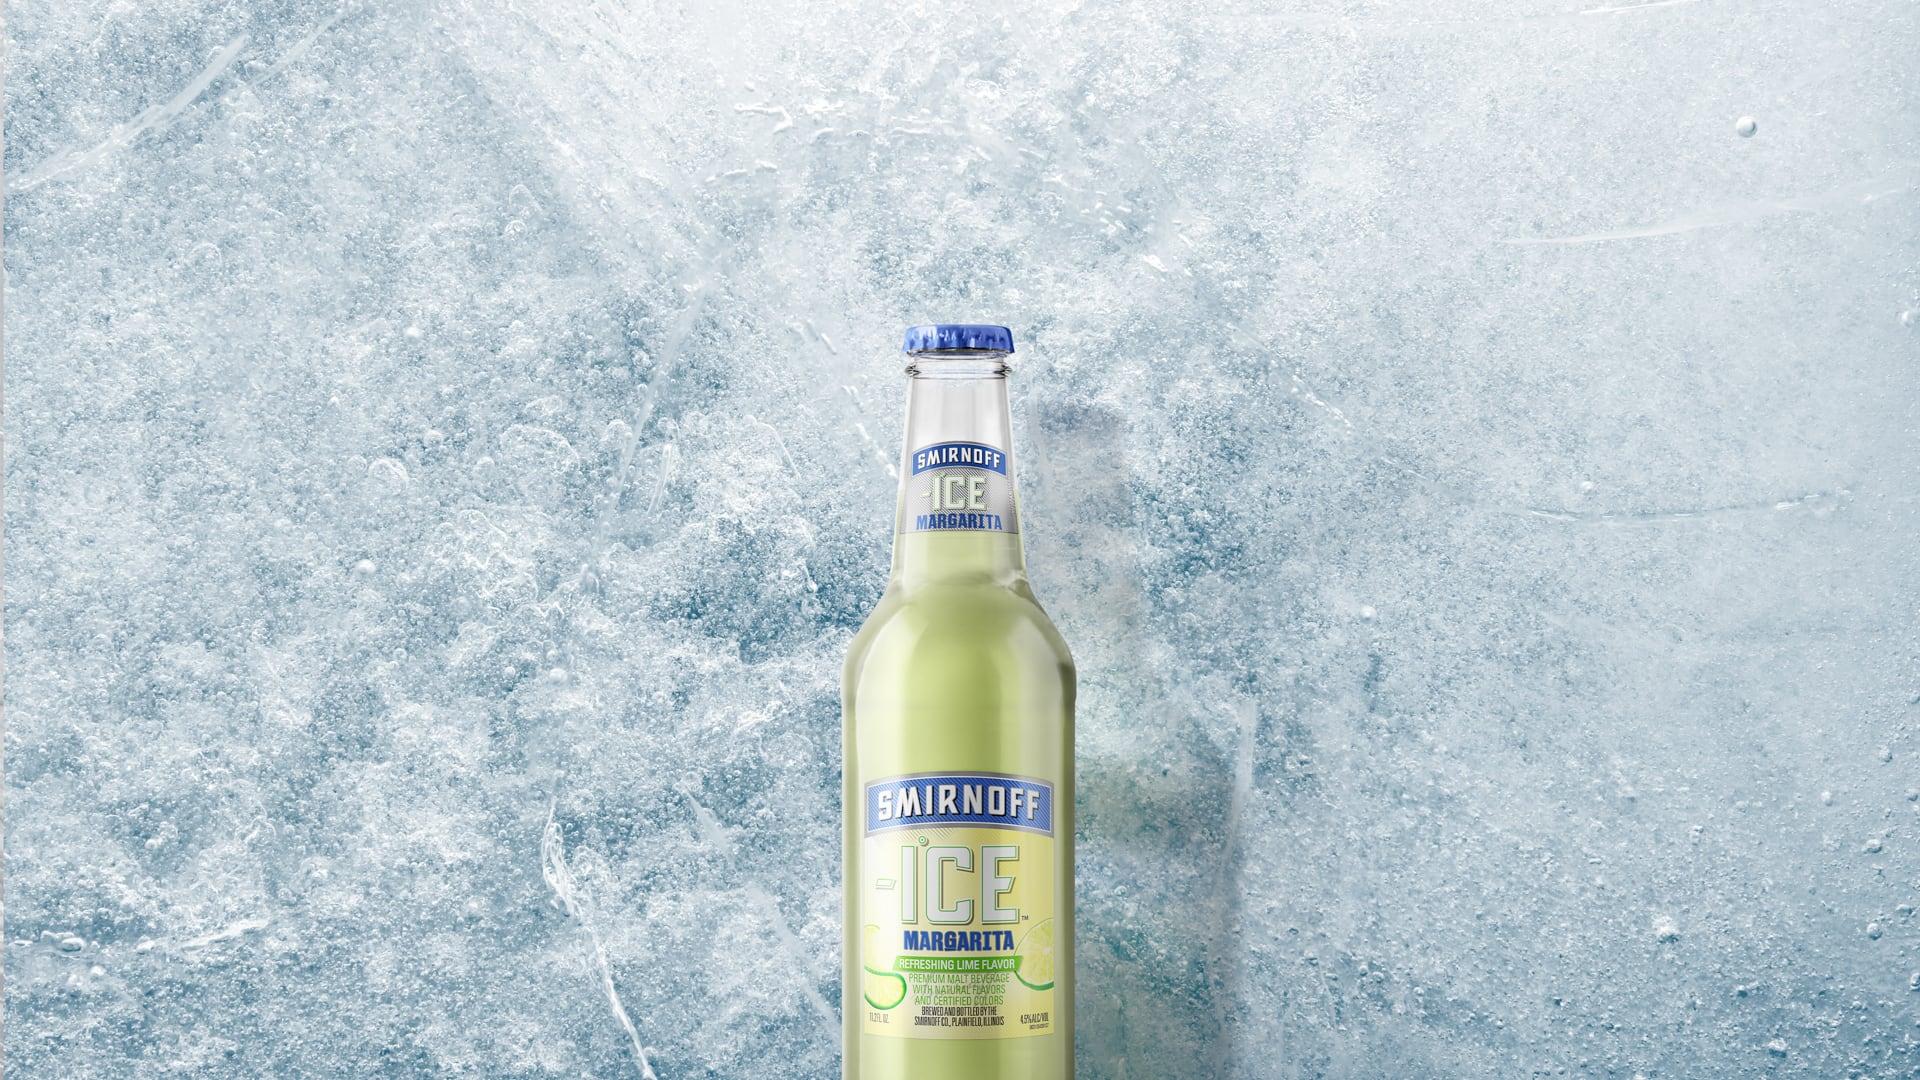 Smirnoff Ice Margarita on a Icy background